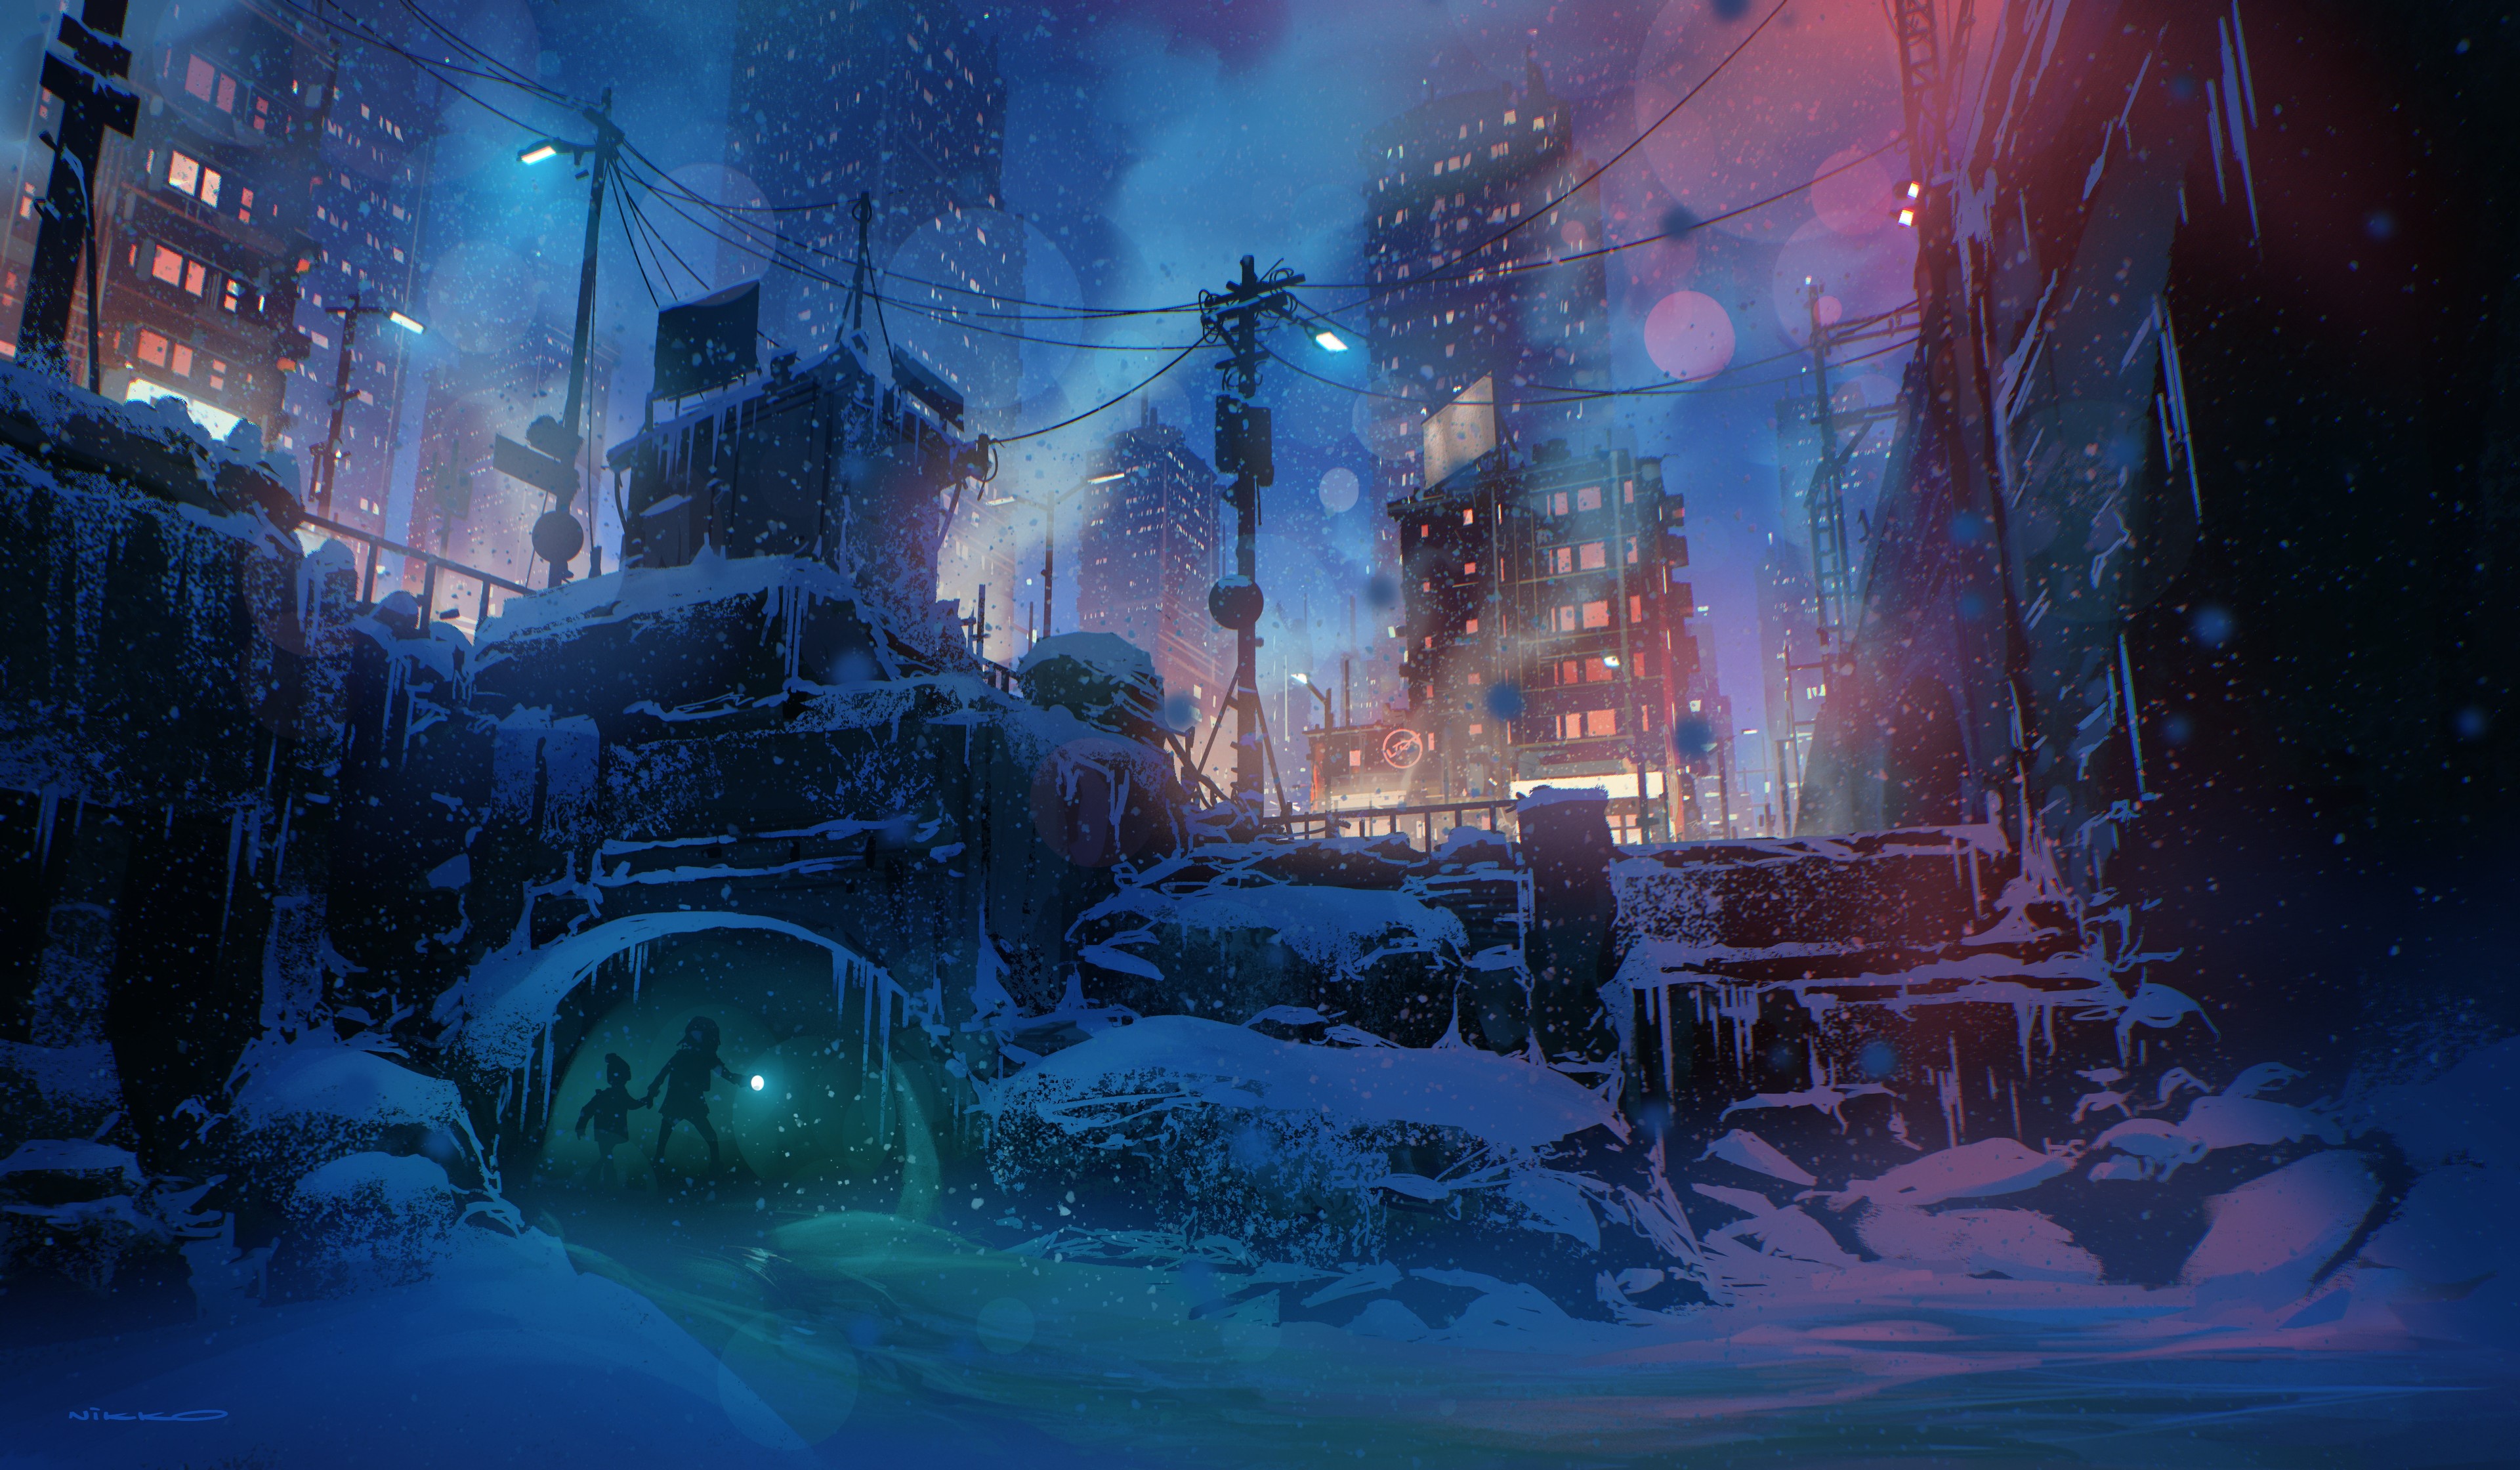 Free download 431422 4K Nikolai Lockertsen snowflakes digital art winter [3840x2240] for your Desktop, Mobile & Tablet. Explore Anime Winter City Wallpaper. City Winter Wallpaper, Winter Anime Wallpaper, New